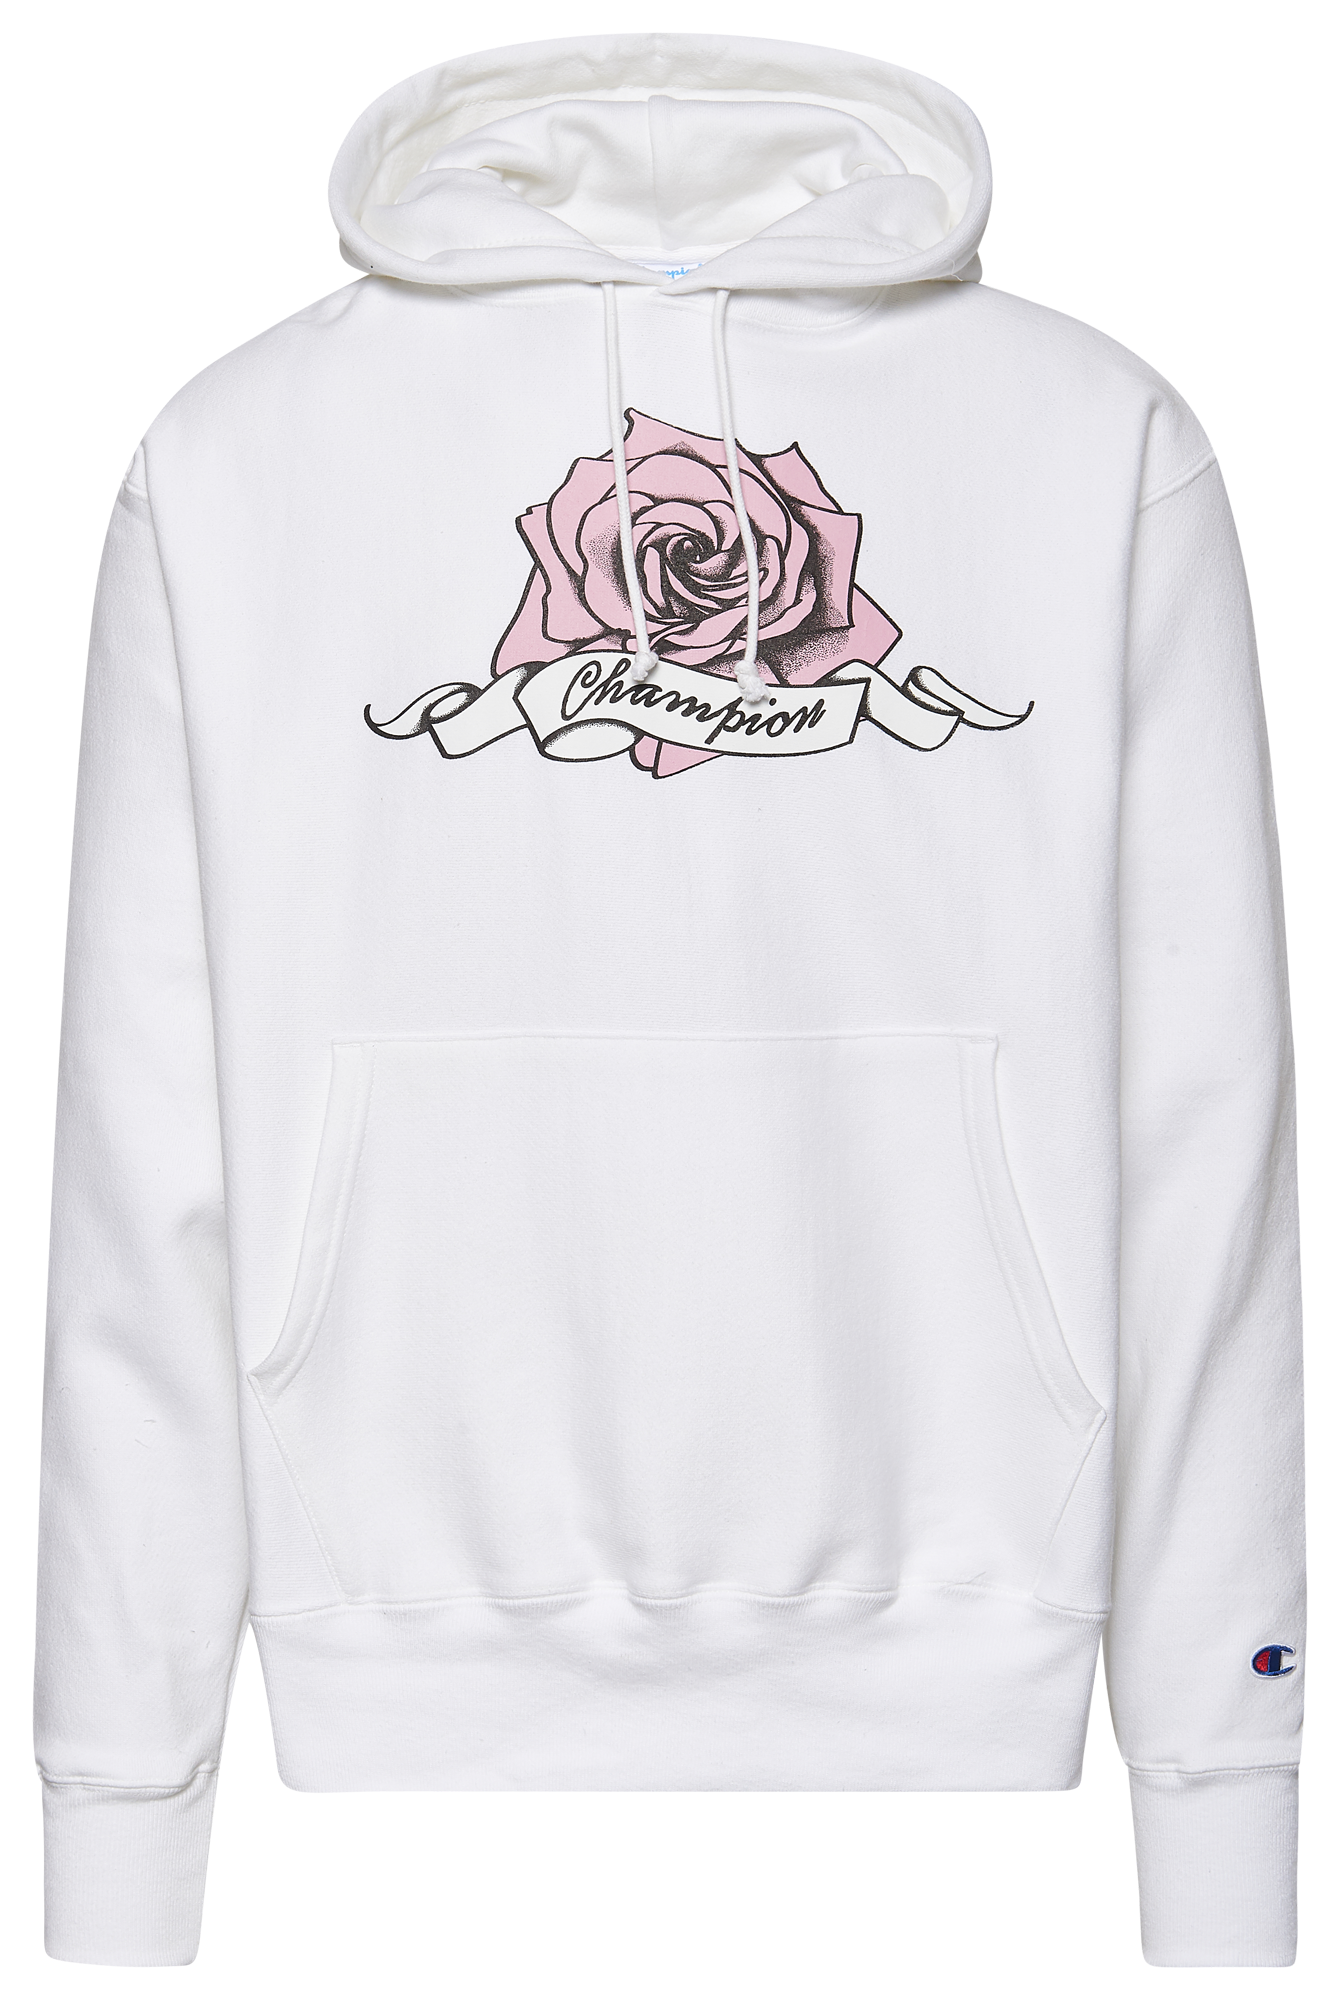 champion rose hoodie